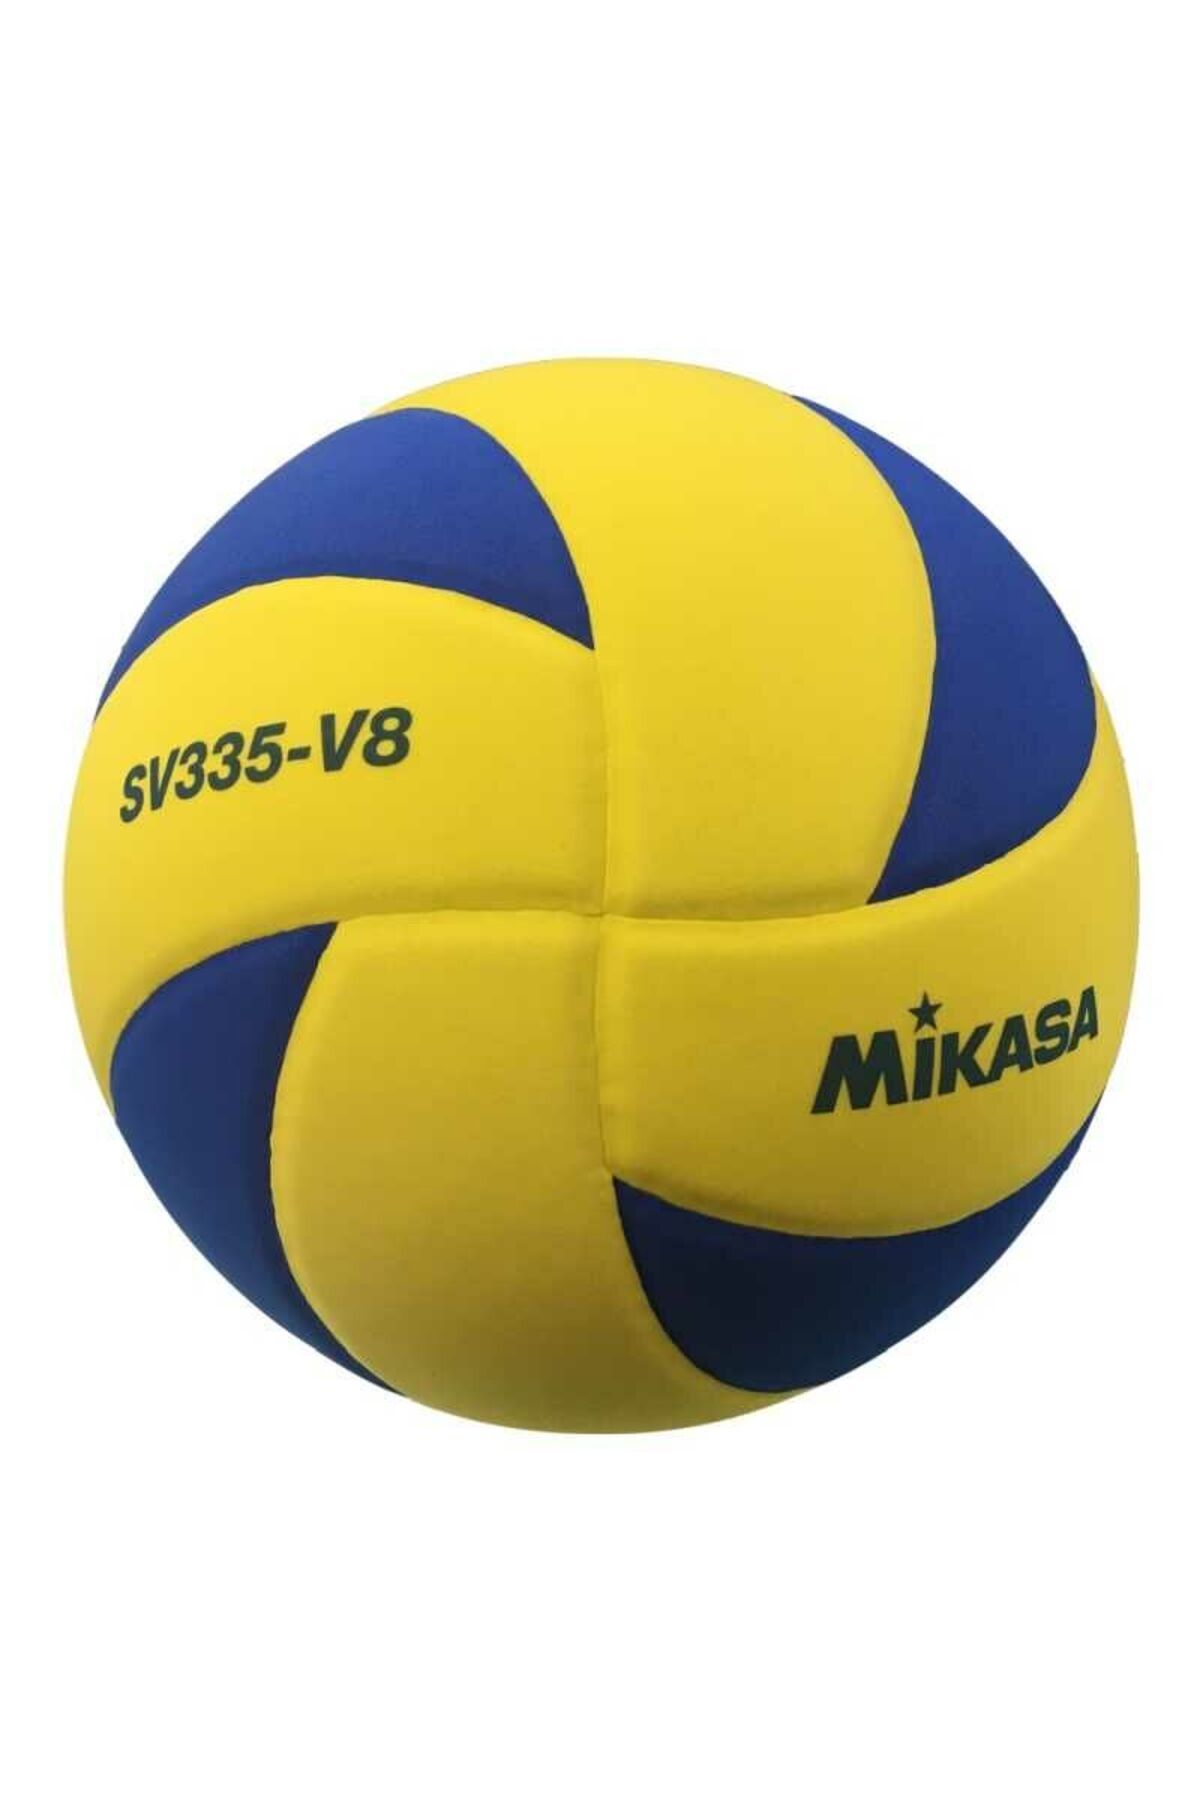 MIKASA Sv335-v8 Fıvb Approved Eva Kaplama Kar Voleybol Topu